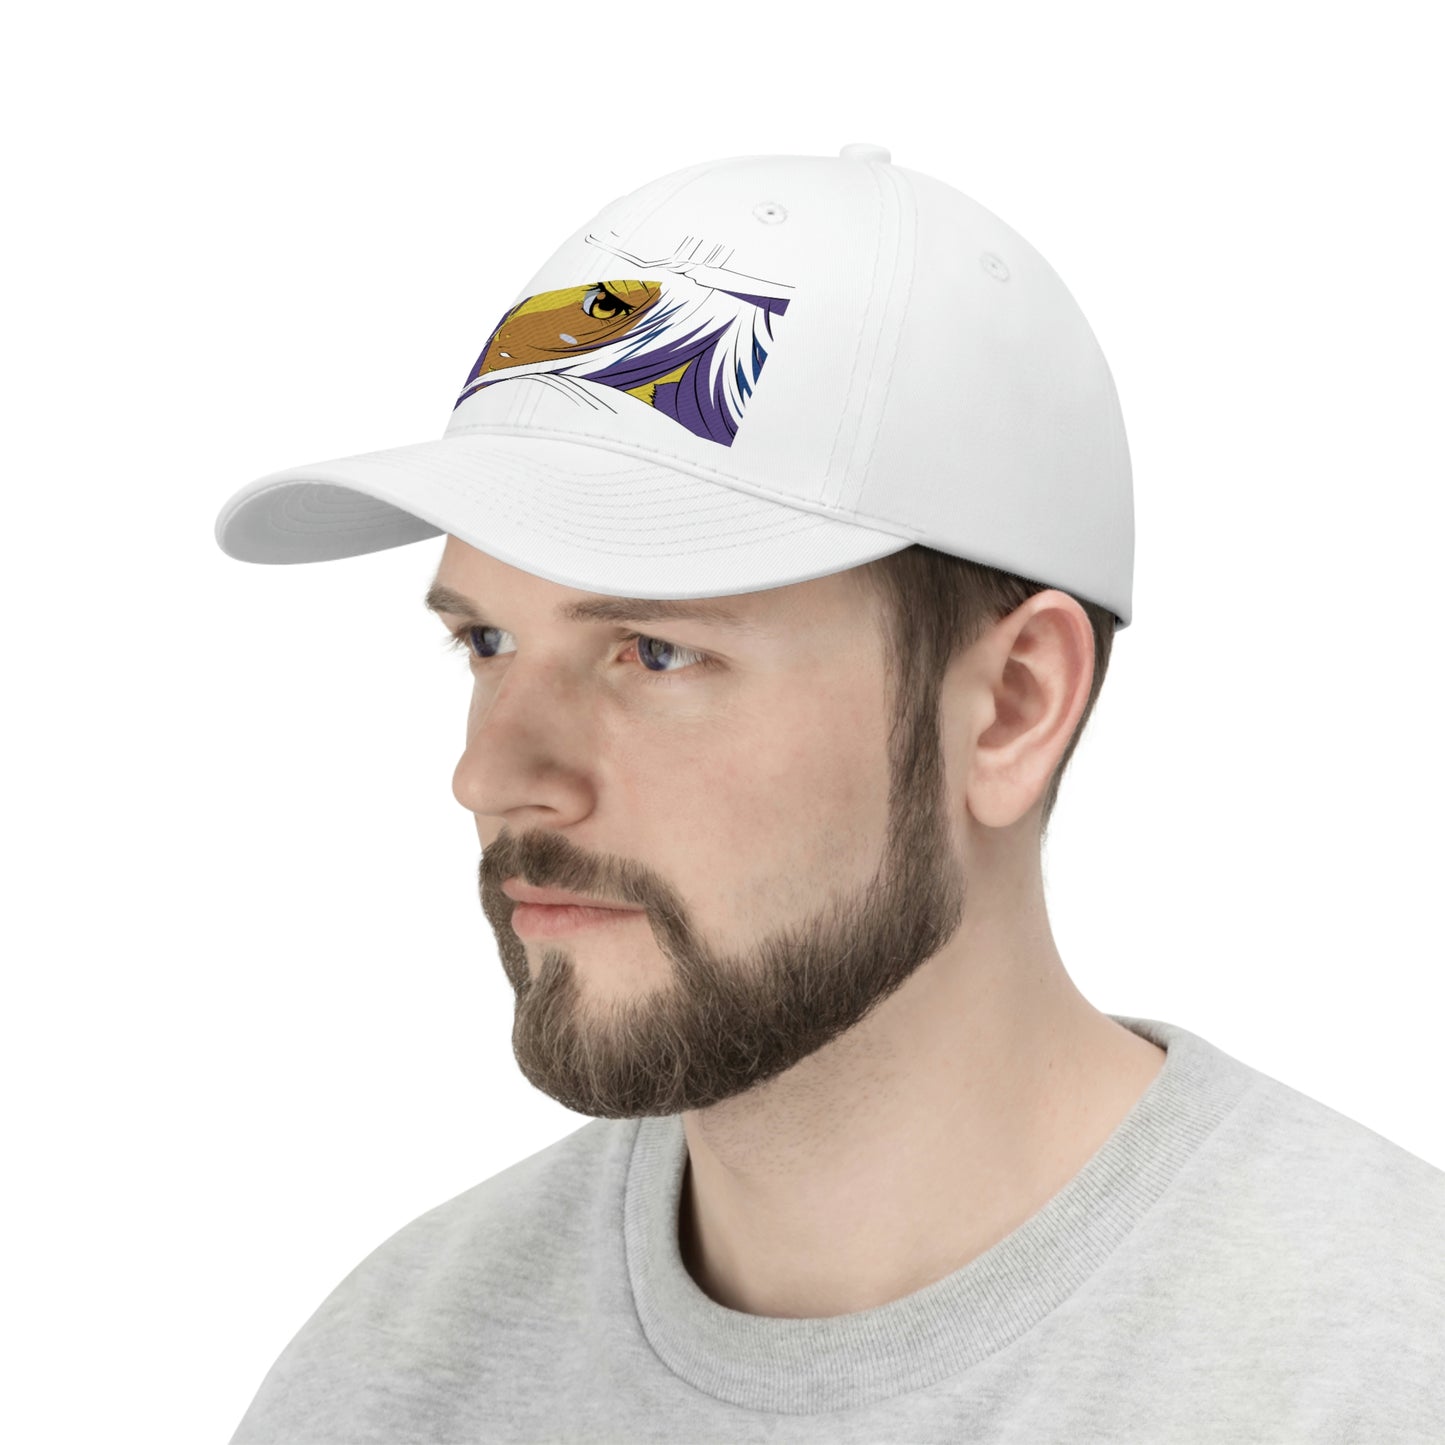 Ca' Version 1 Hat